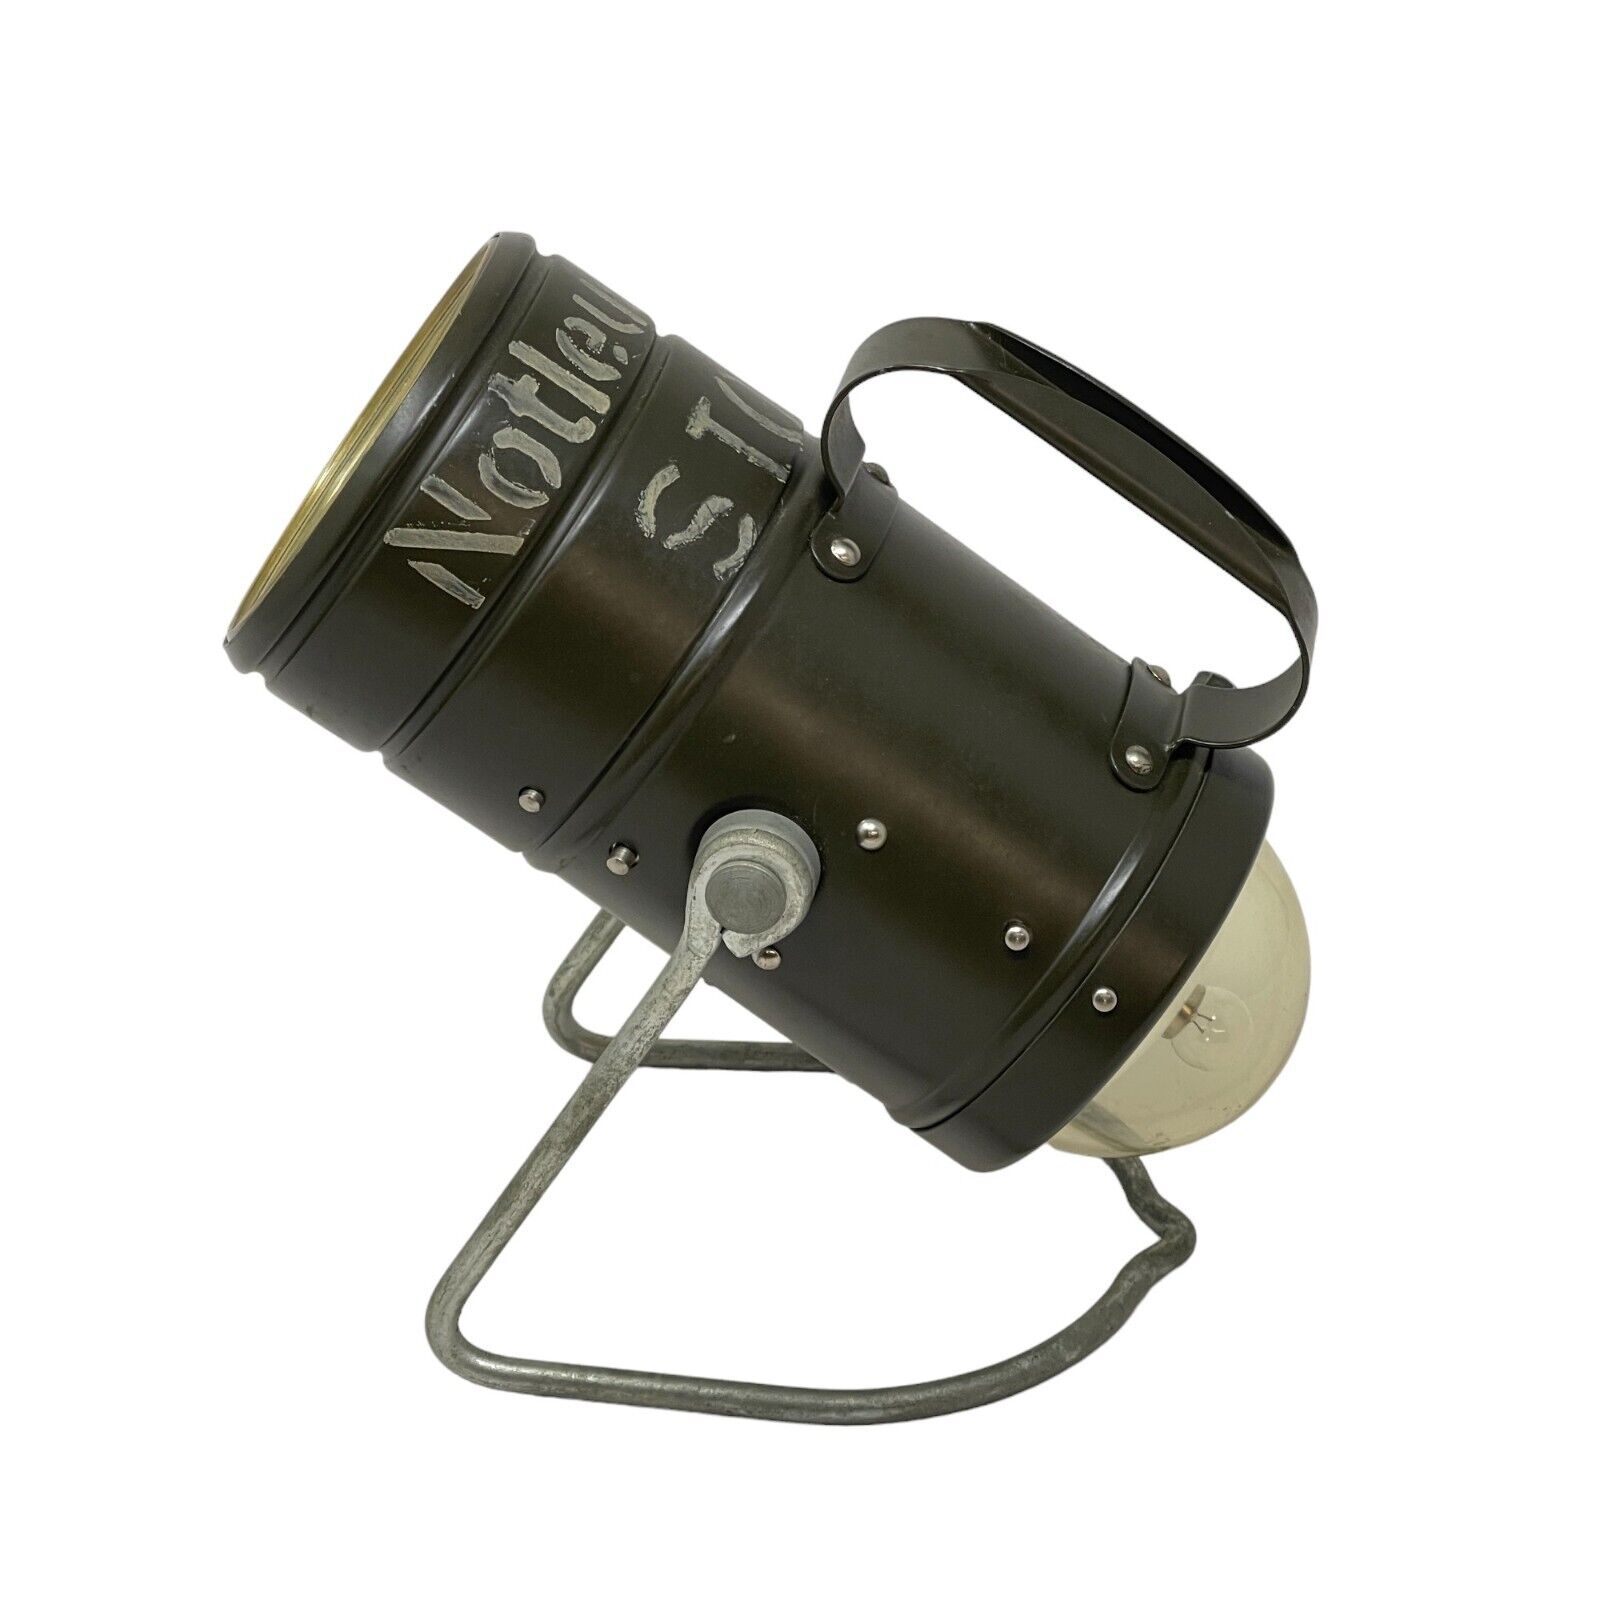 Vintage Varta Military Lamp Light With Spare Bulb 1964